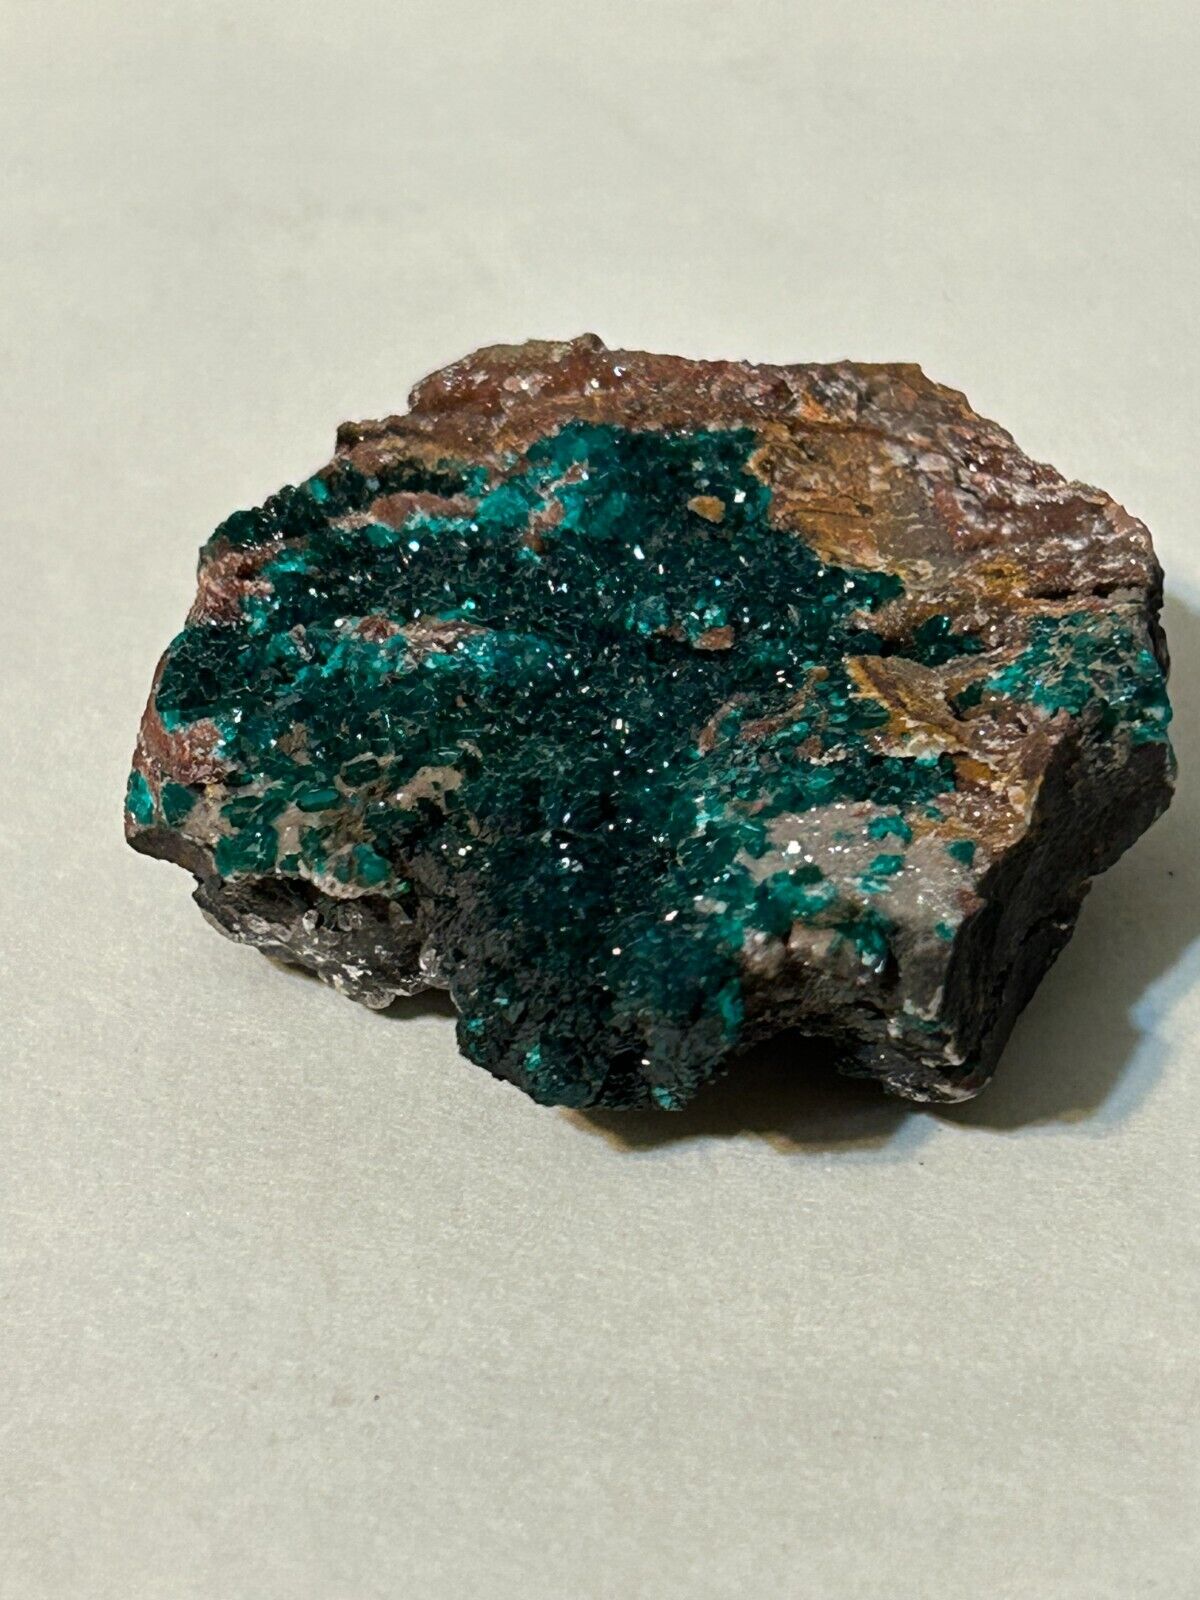 Very nice 72 gram piece of Dioptase - gorgeous deep emerald green color